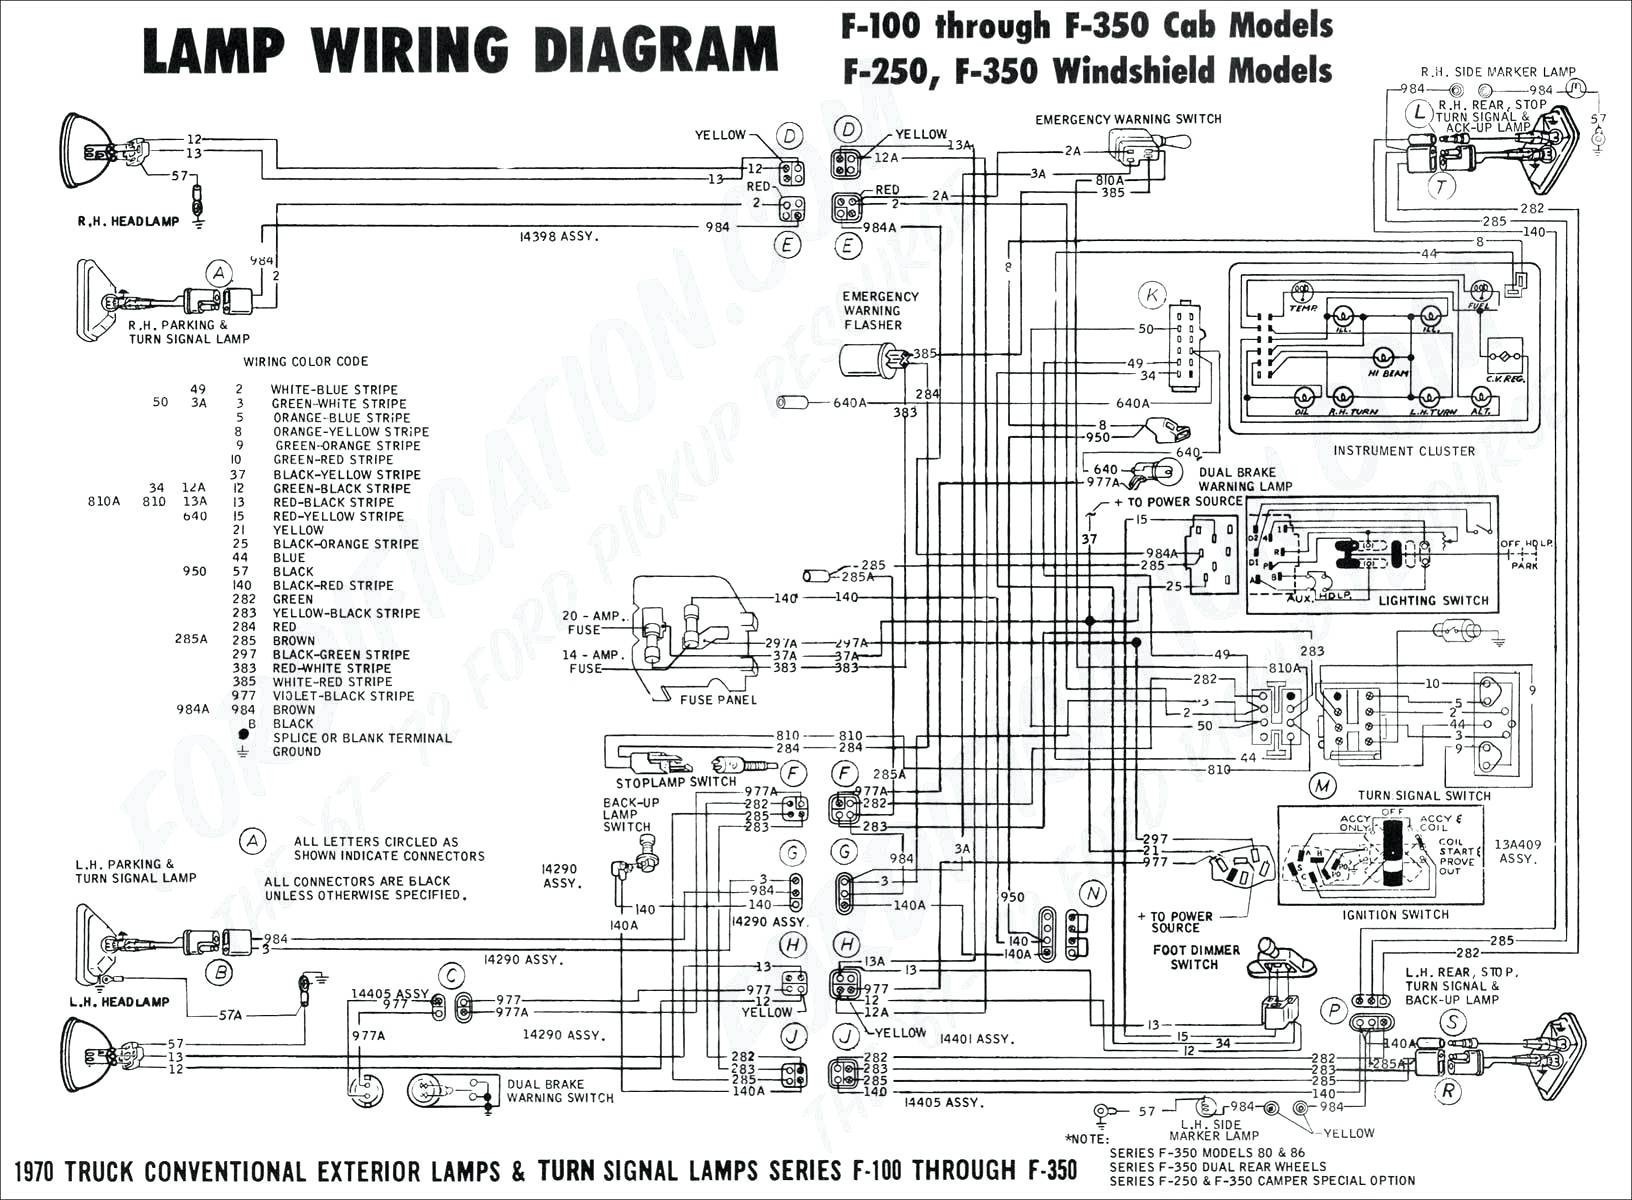 nox sensor wiring easy to read wiring diagrams u2022 rh myschematicdiagram us